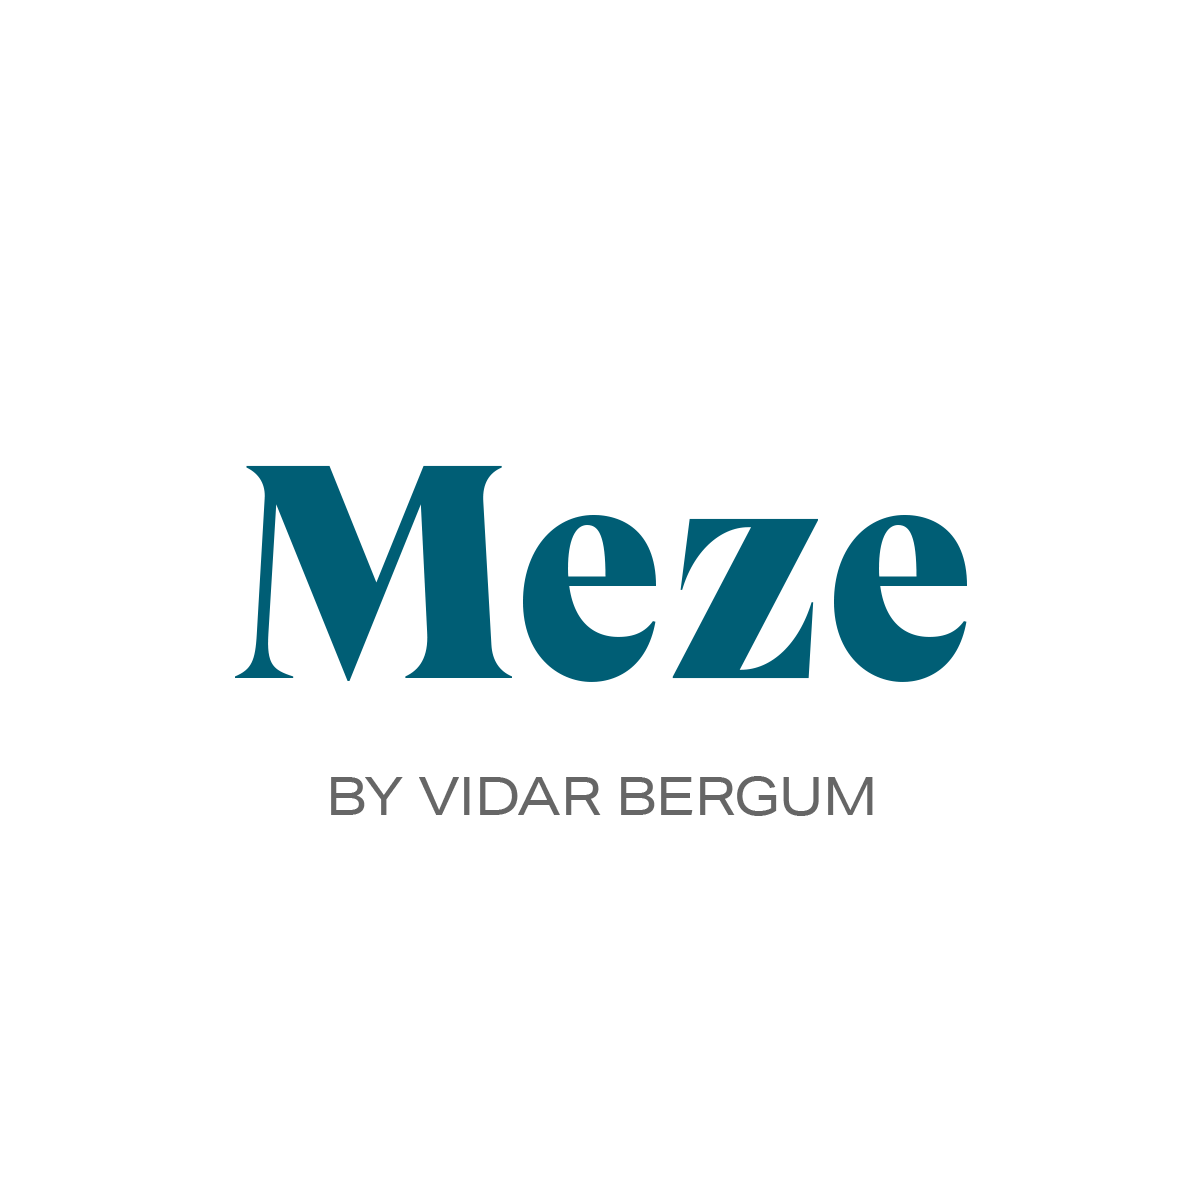 Meze by Vidar Bergum